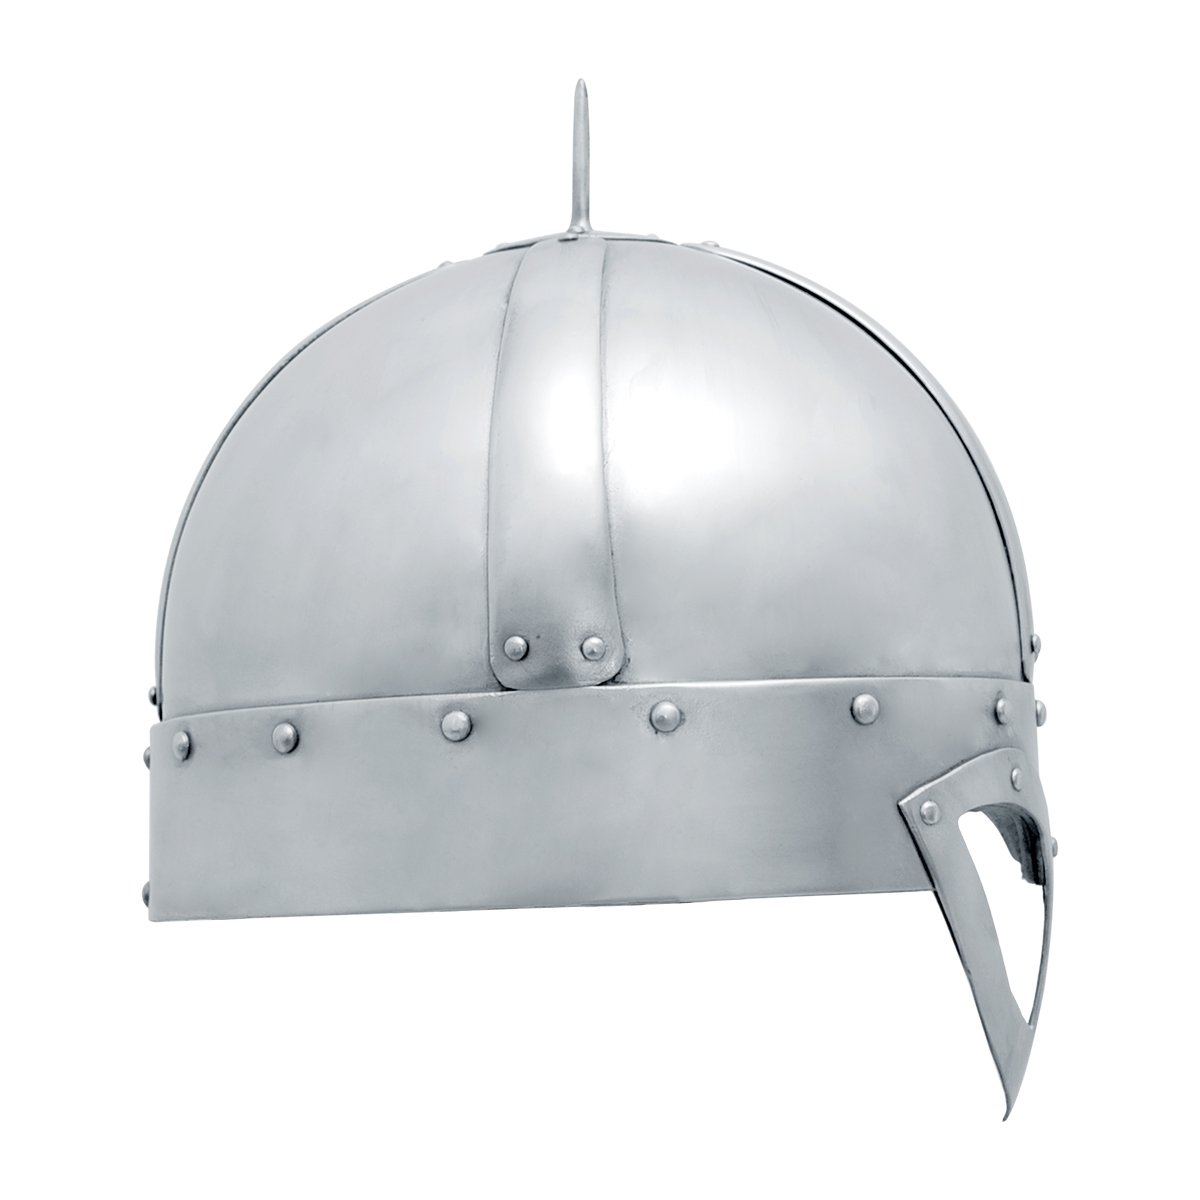 The Gjermundbu helmet, Size M